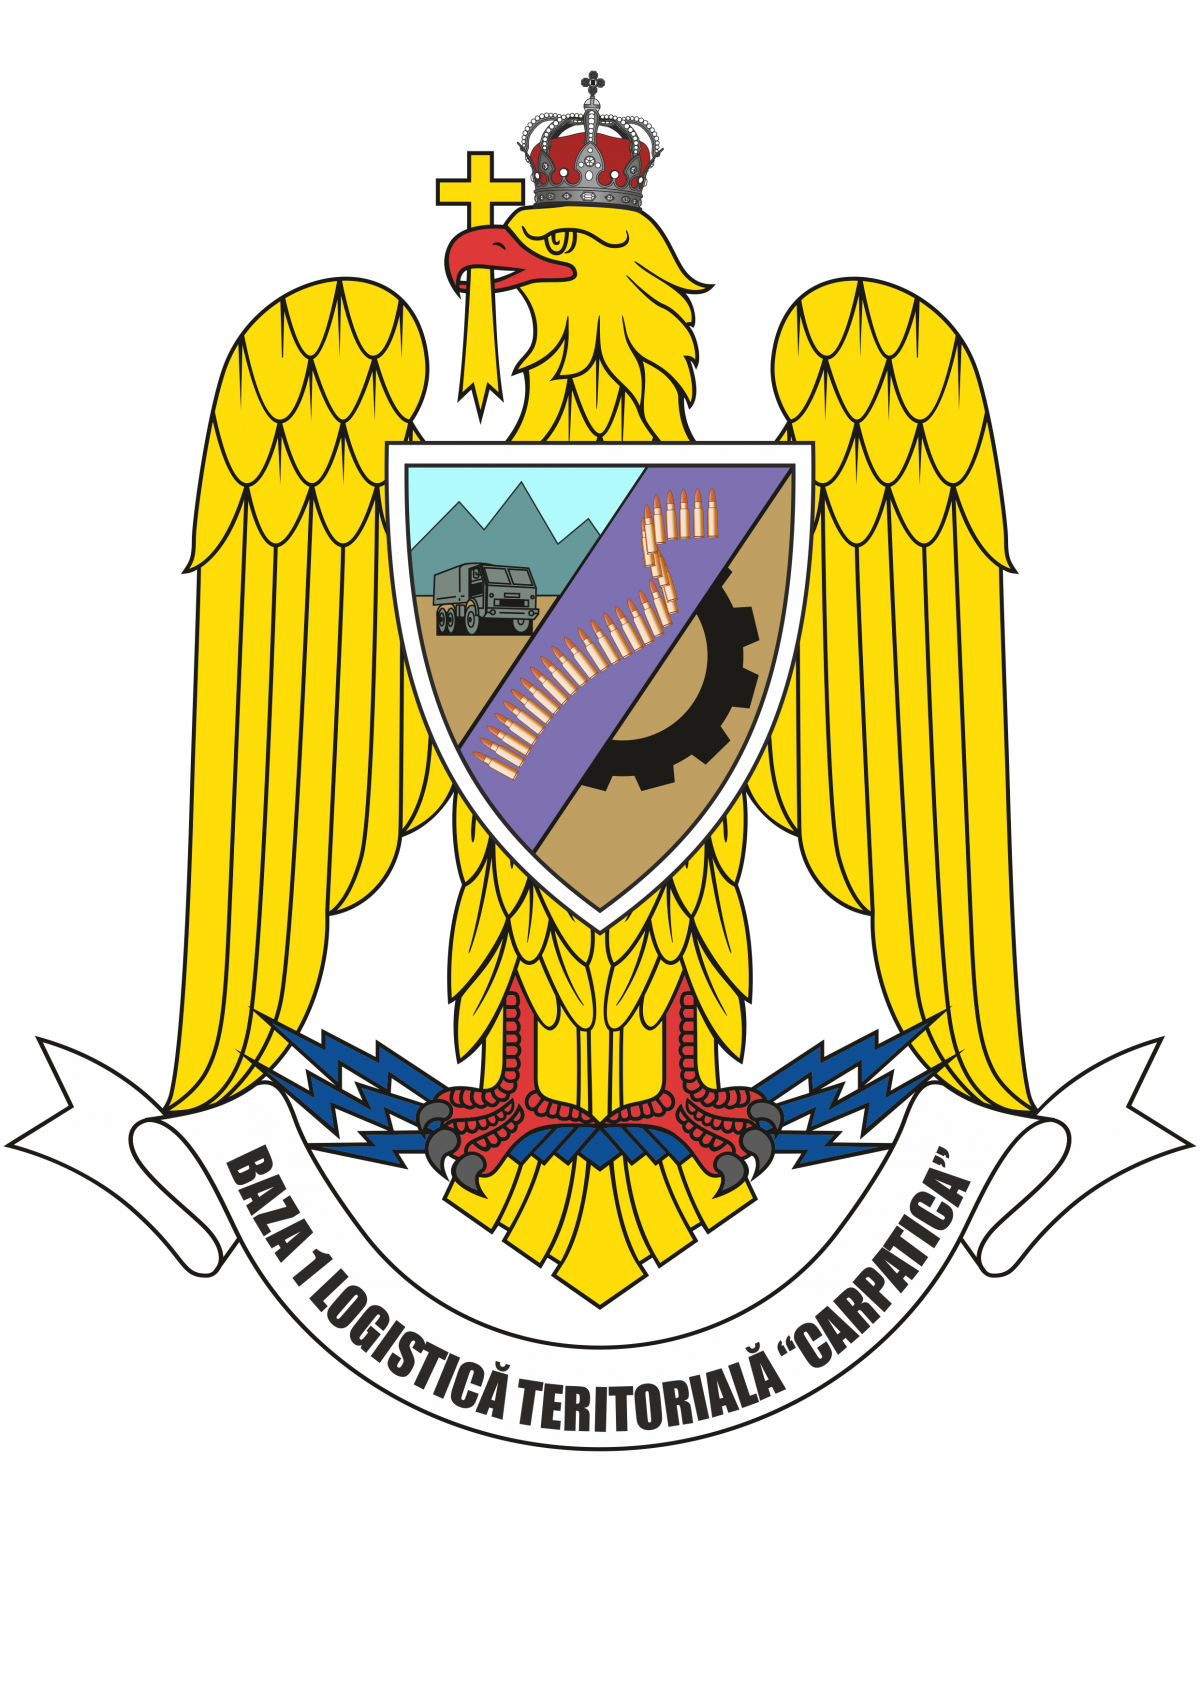 1st Territorial Logistics Base Carpatica, Romanian Army - Stemă - coat of  arms - crest of 1st Territorial Logistics Base Carpatica, Romanian Army